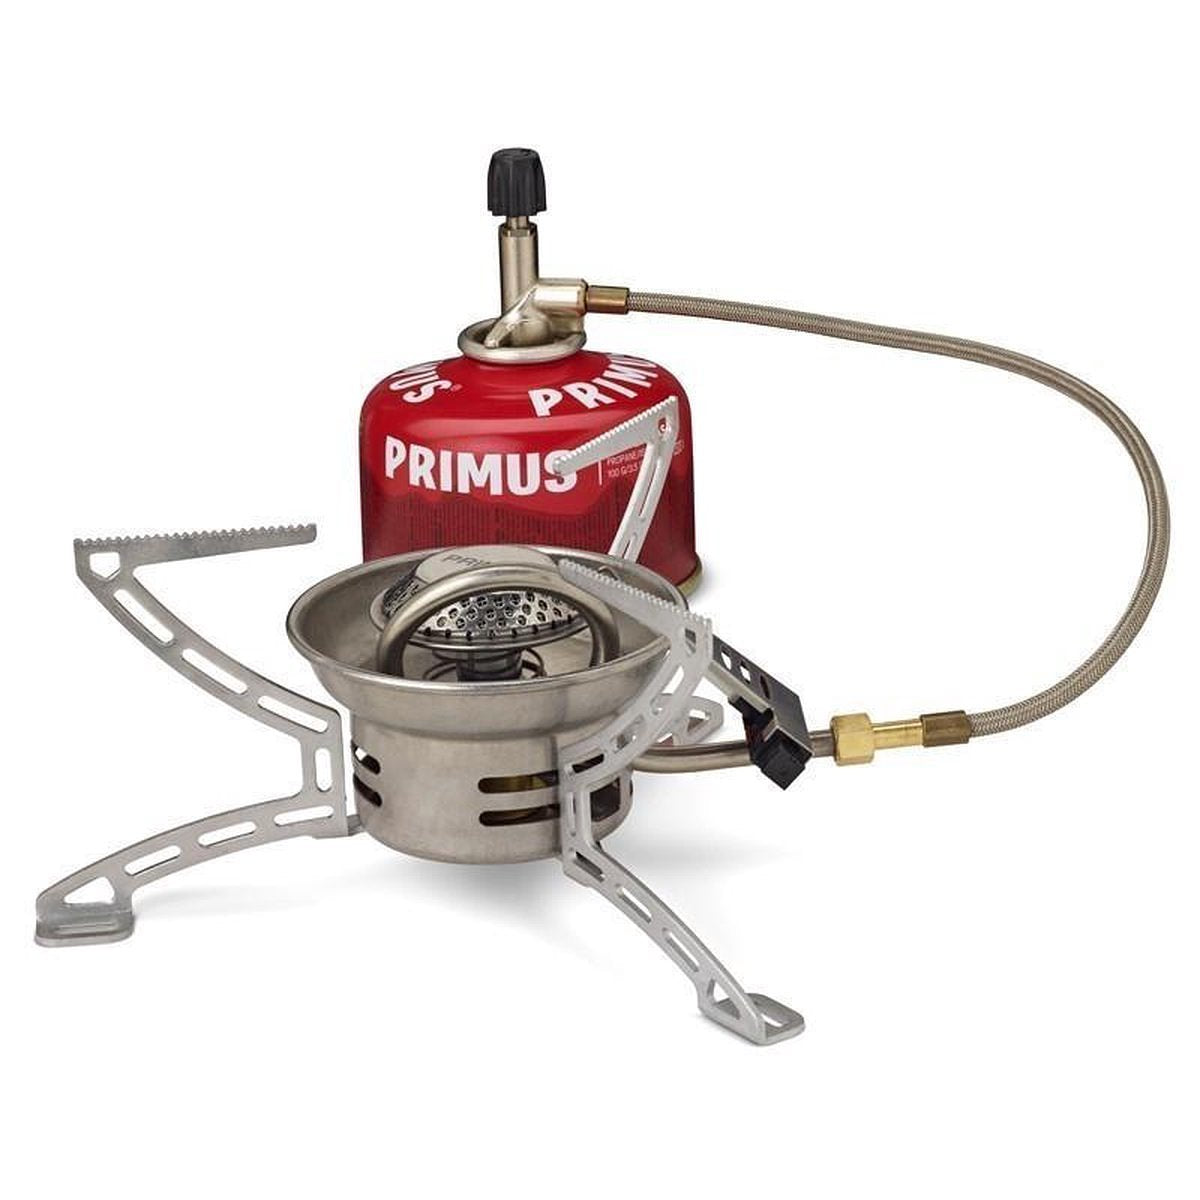 Primus Easy fuel stove